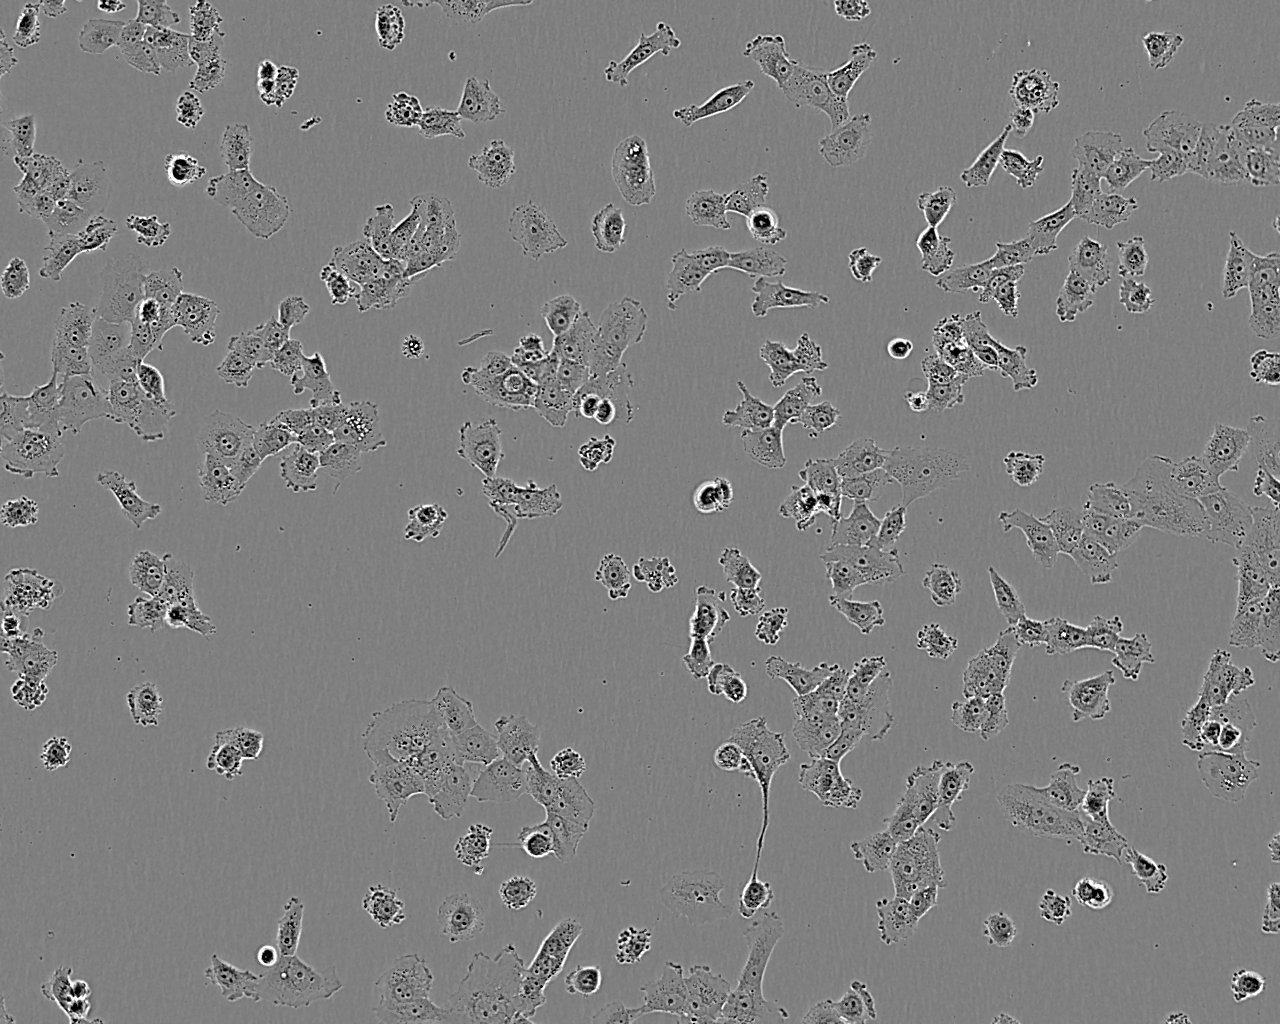 NCI-H2228 Cells|人非小细胞肺癌细胞系,NCI-H2228 Cells